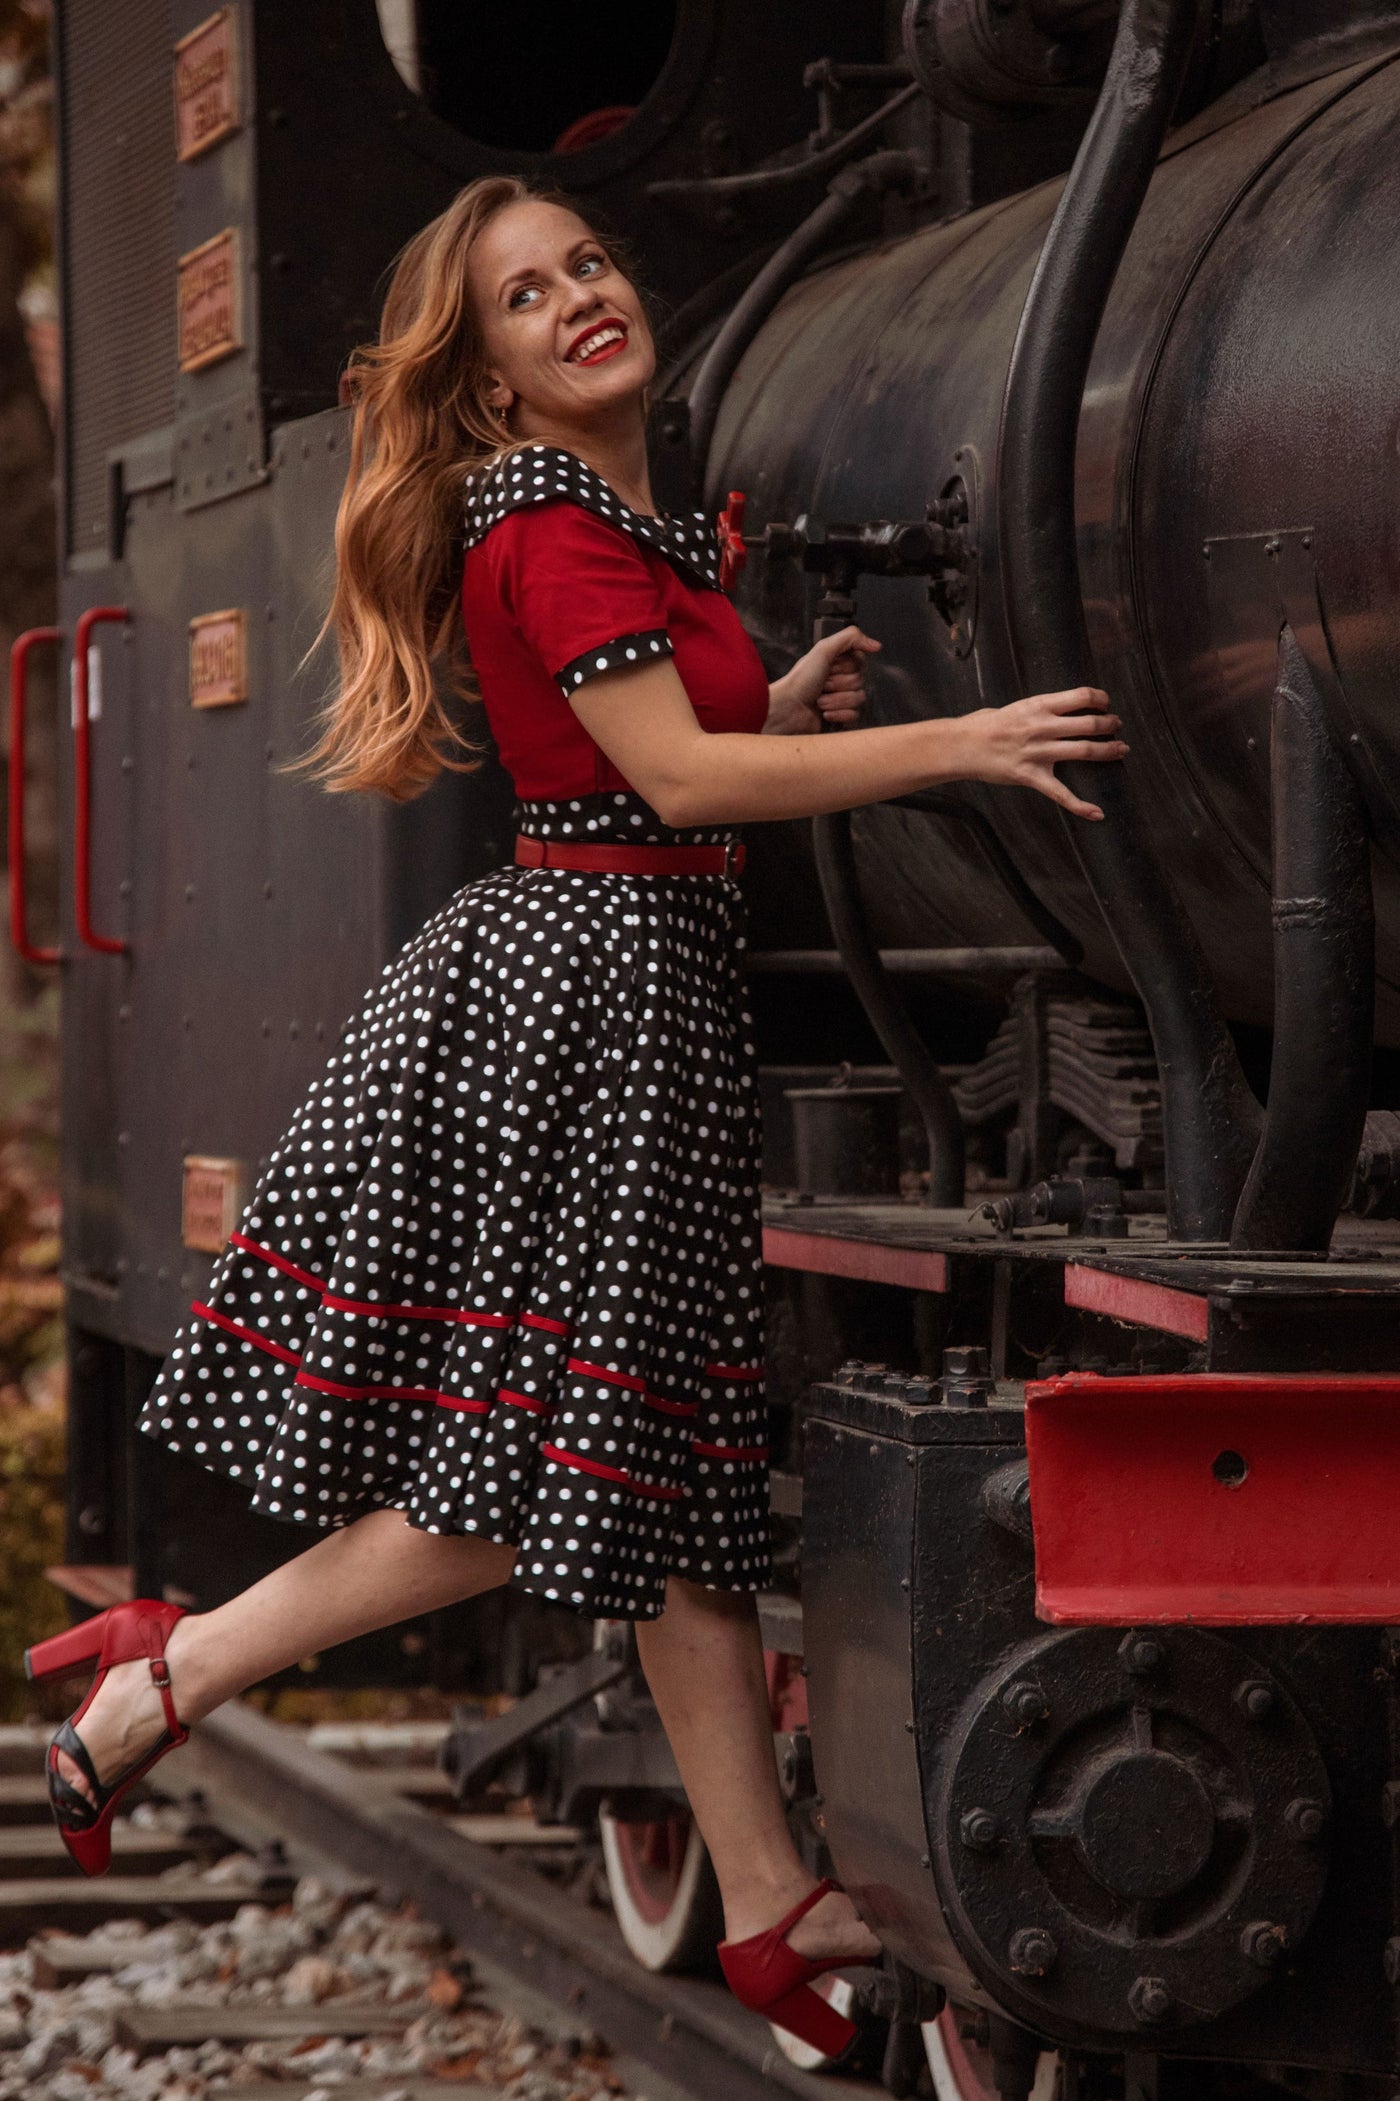 zmajin.svet wearing Rockabilly Red & Black White Polka Dot Off Shoulder Circle Dress at the train station